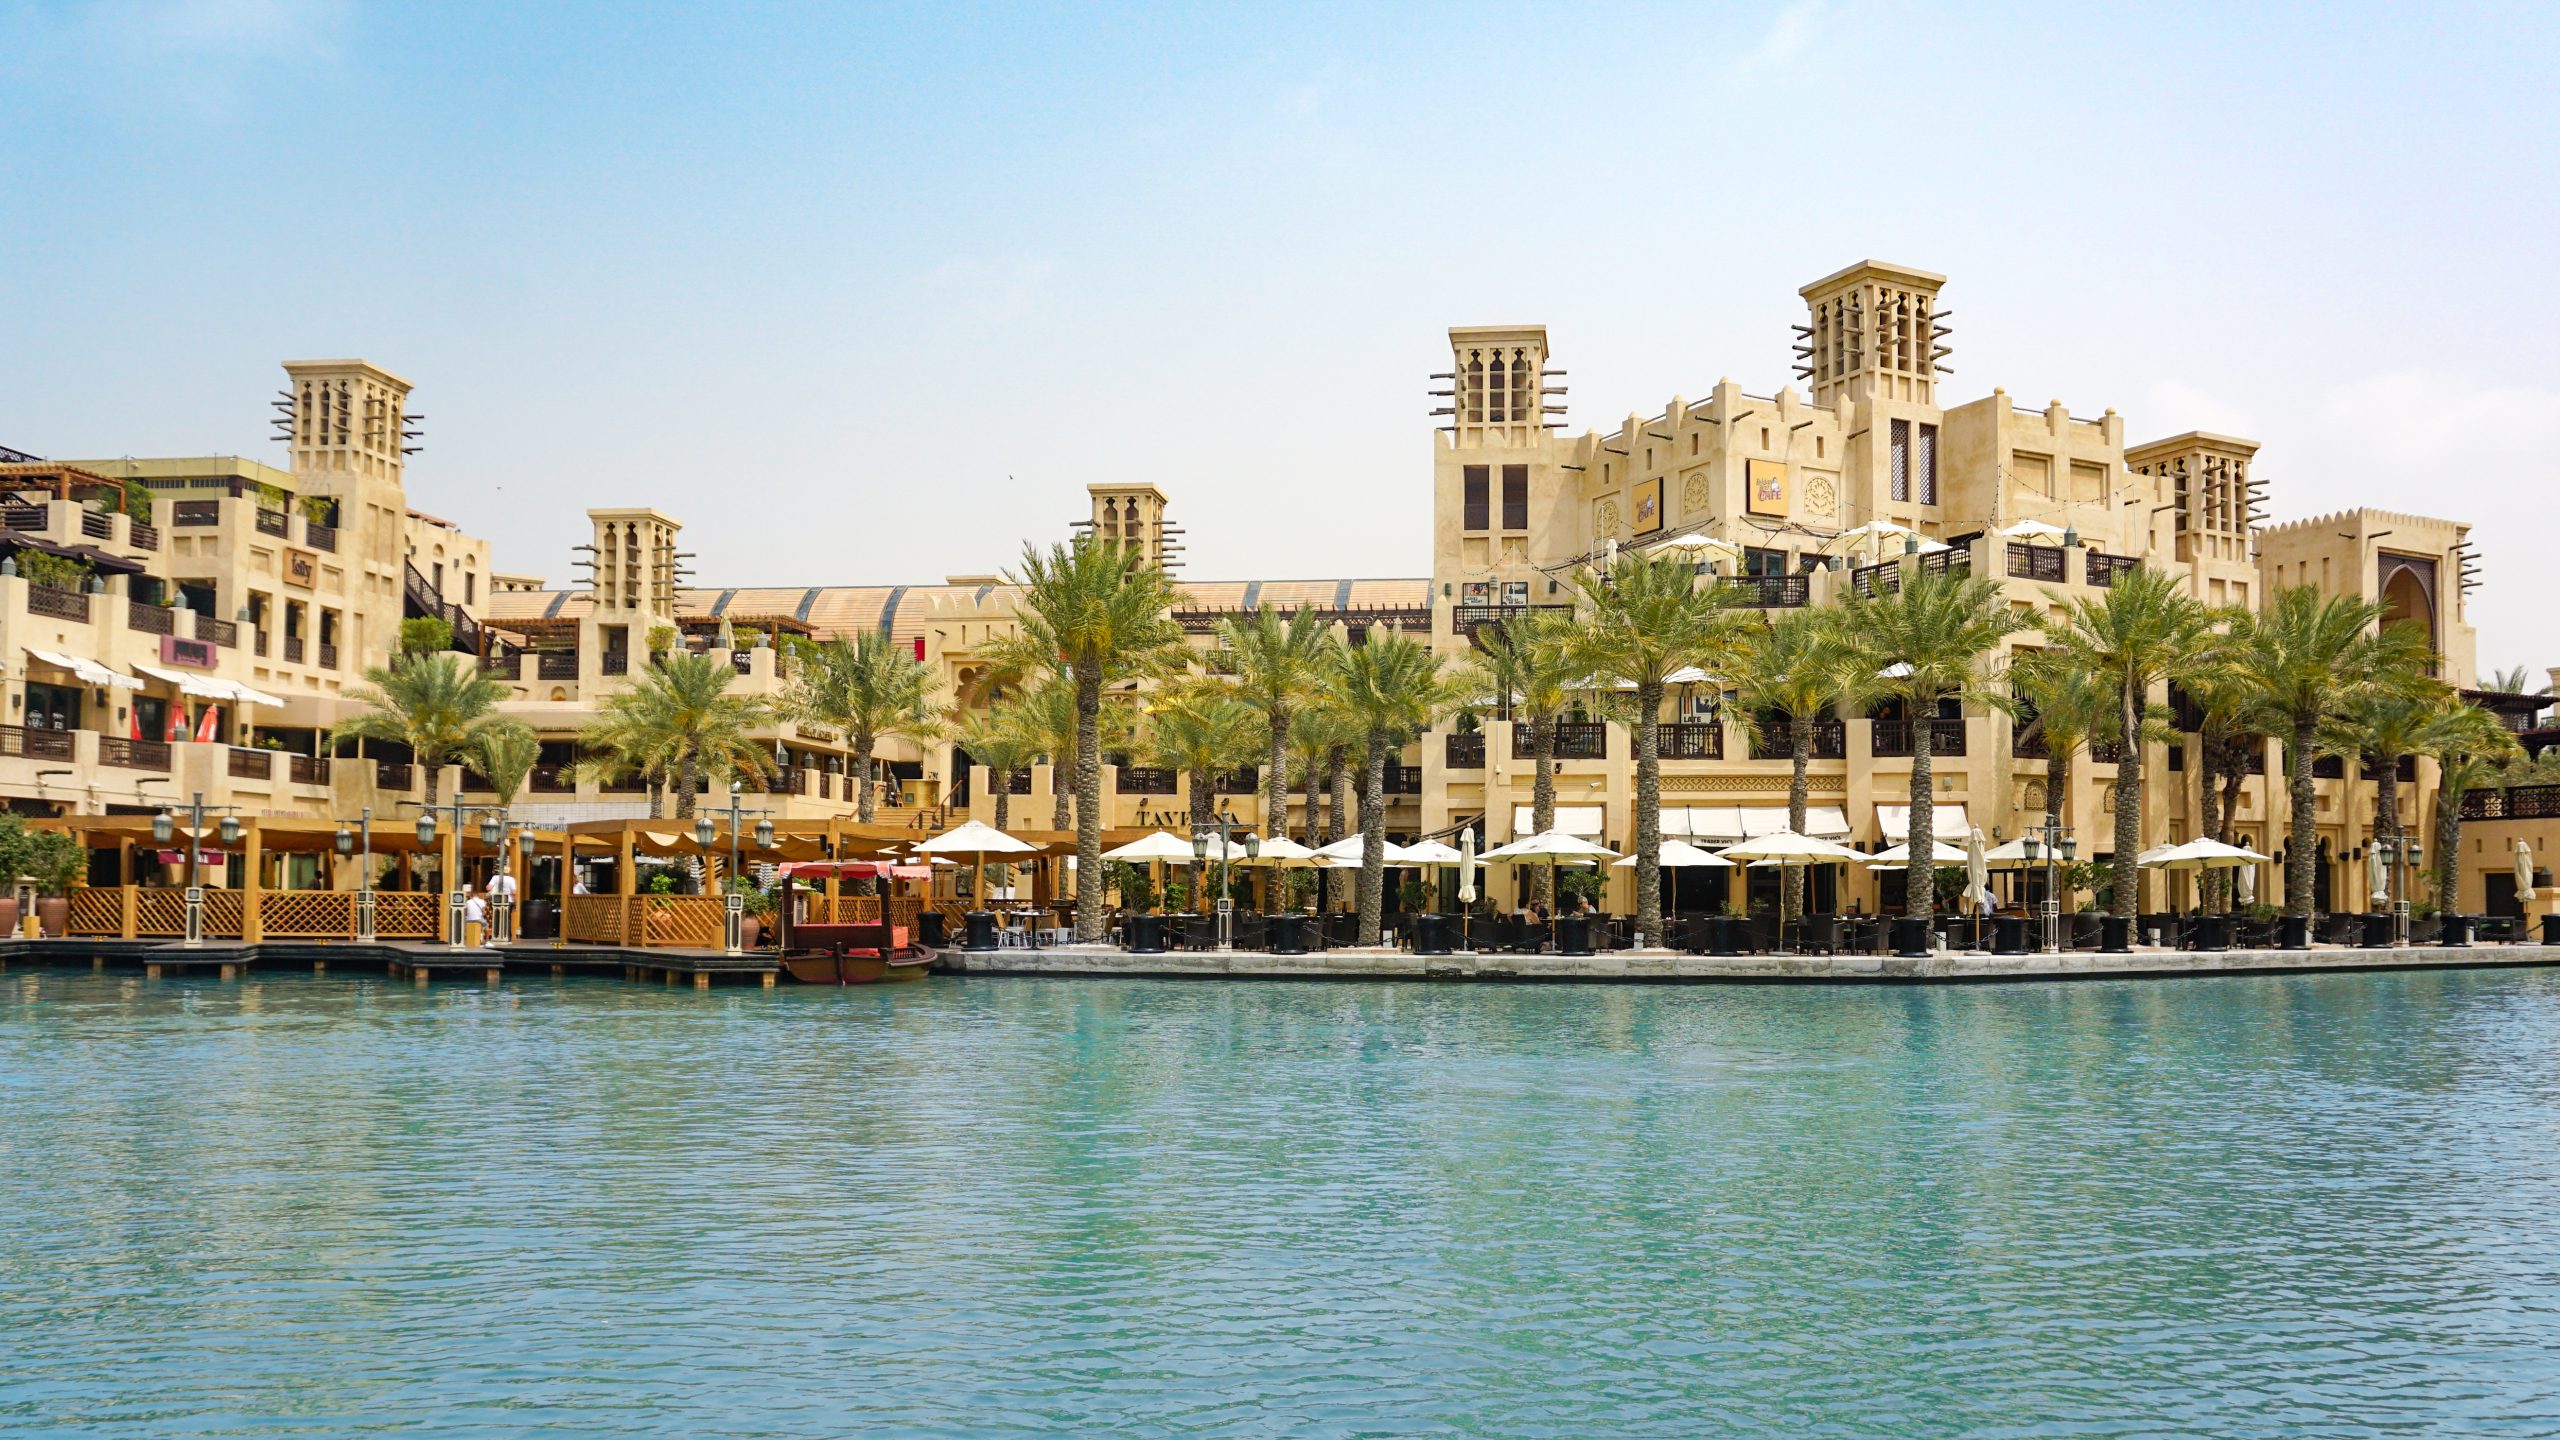 View of luxury buildings at Madinat Jumeirah